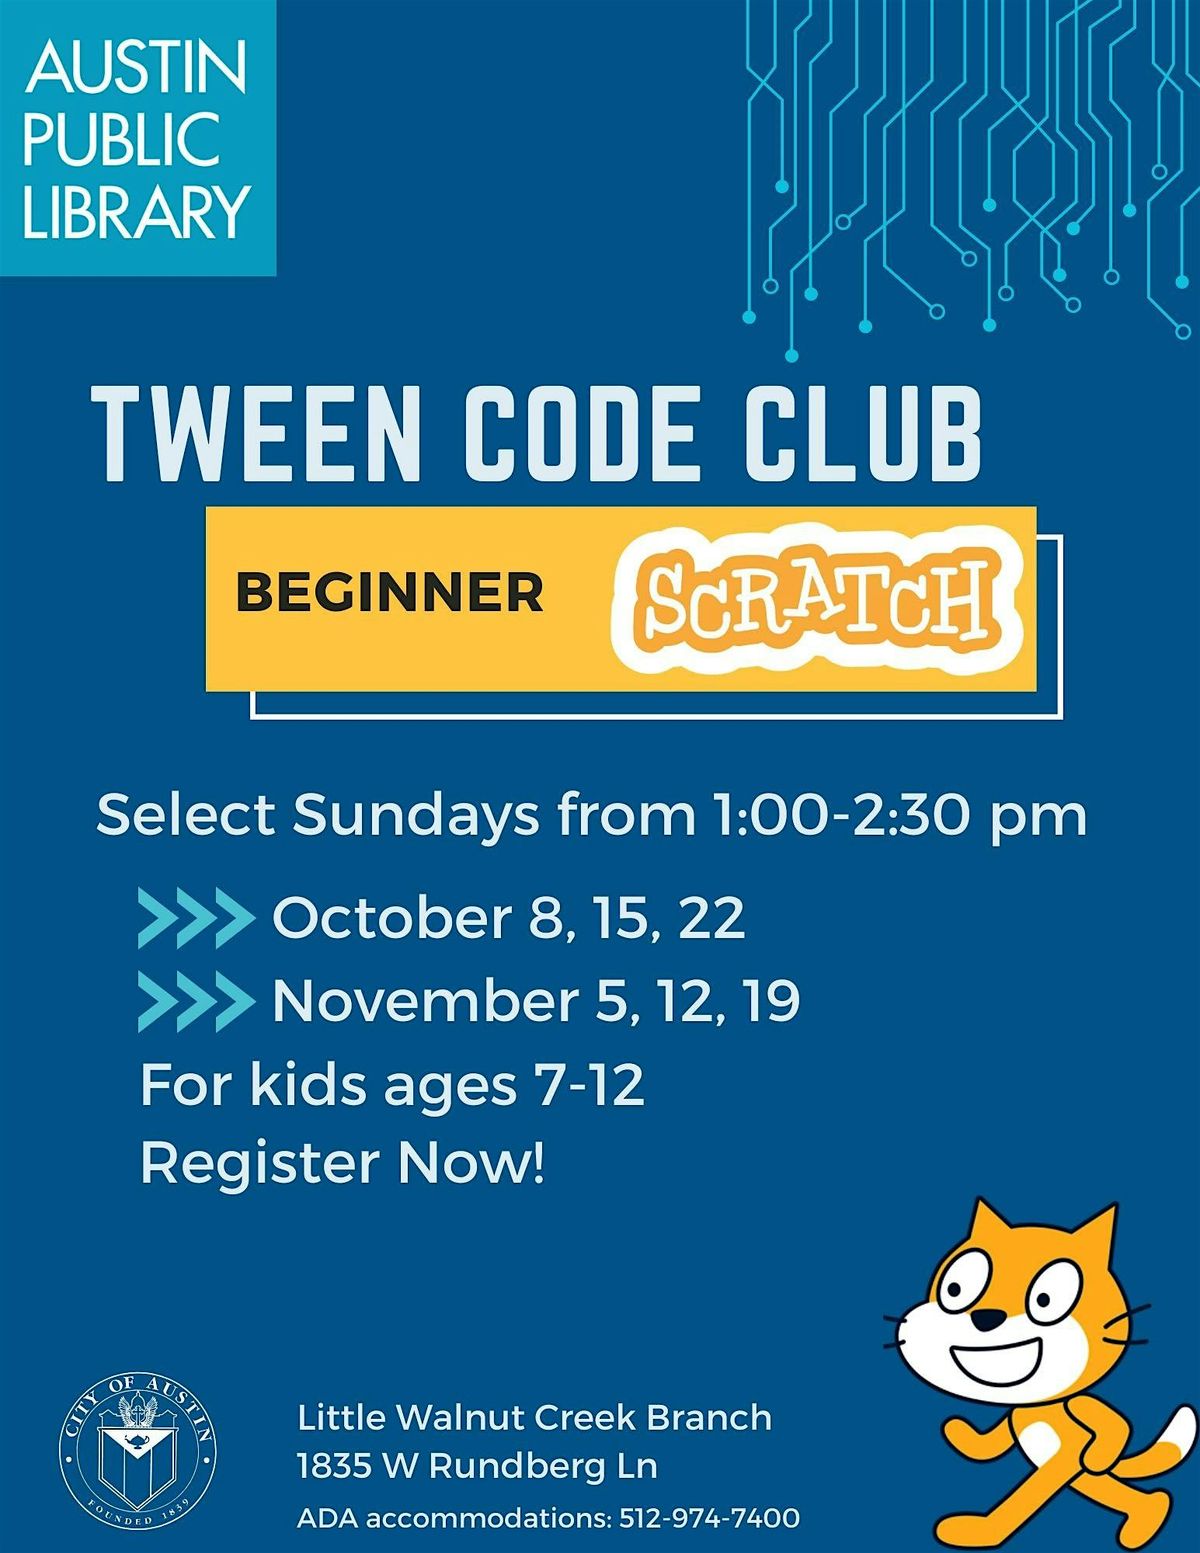 Tween Code Club: ongoing series